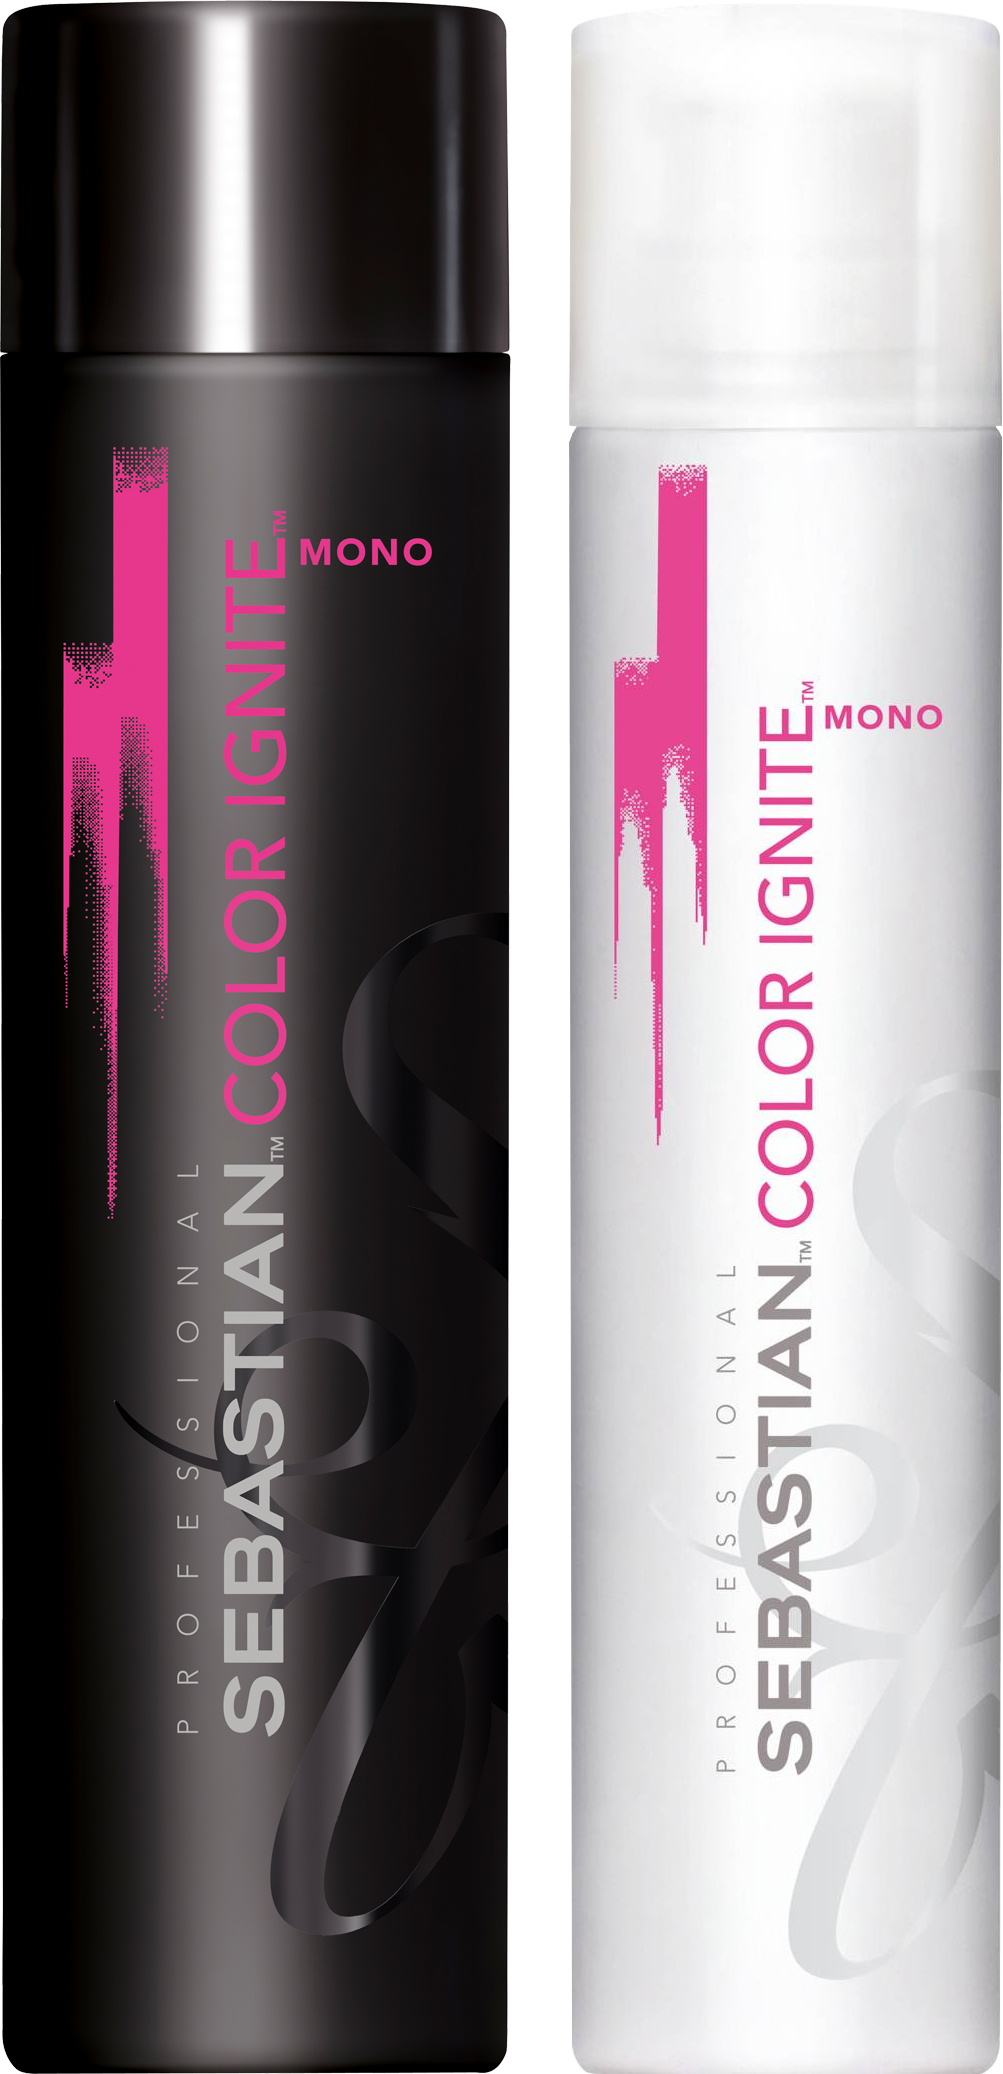 Sebastian Color Ignite Mono Paket